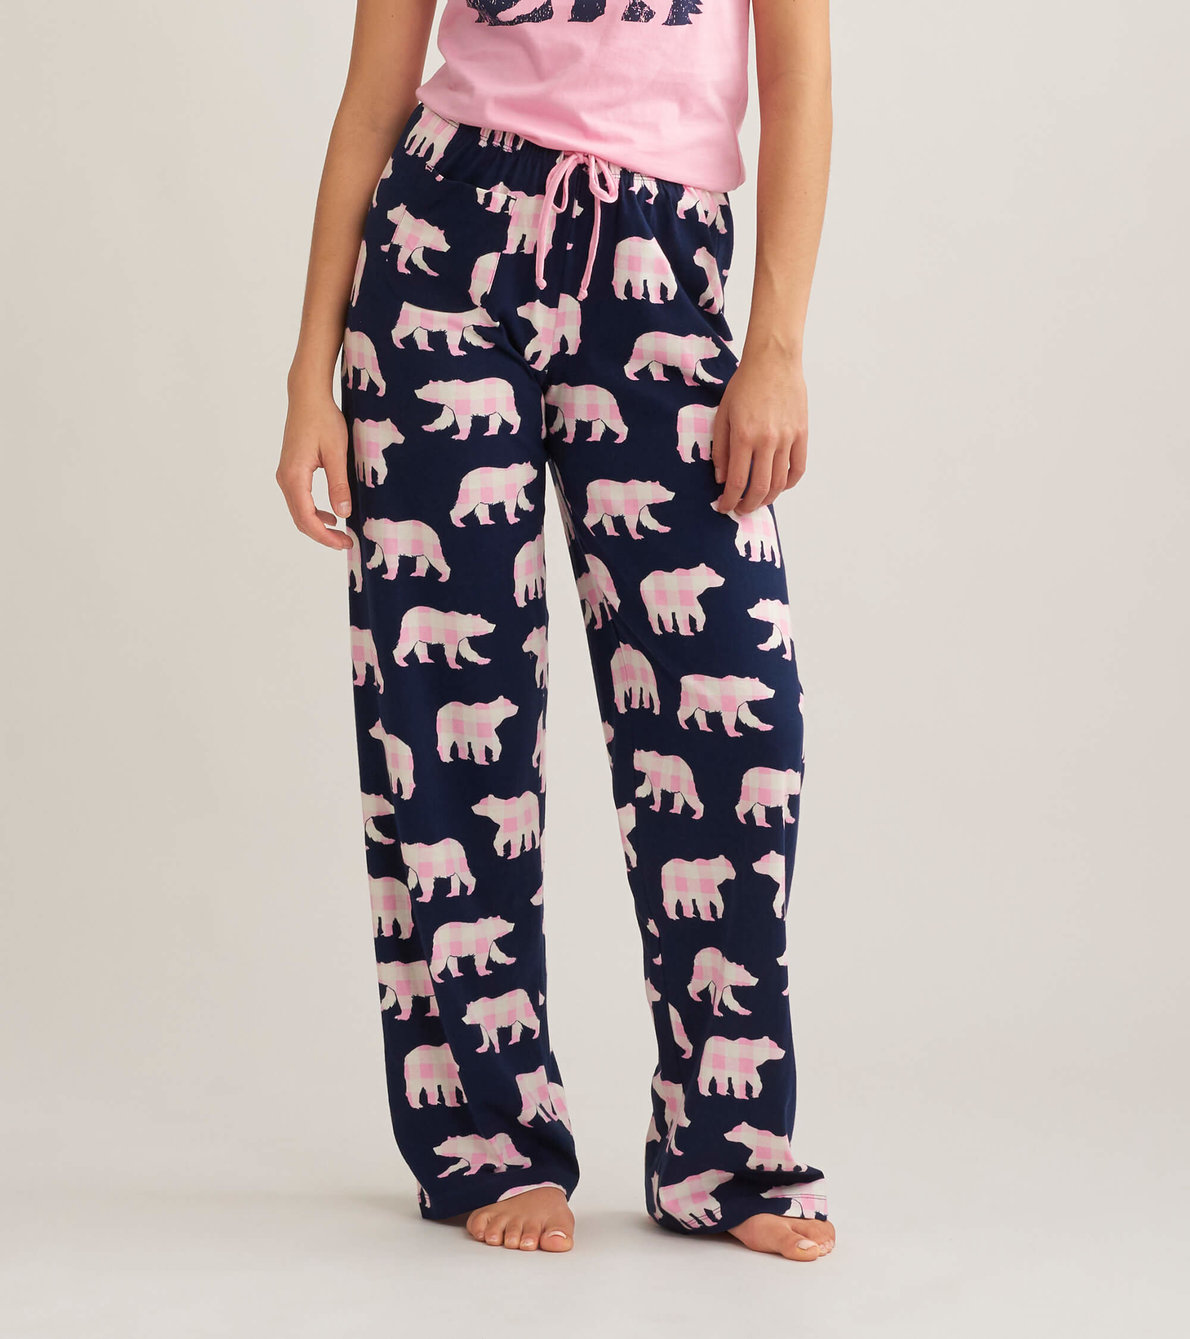 View larger image of Mama Bear Women's Jersey Pajama Pants